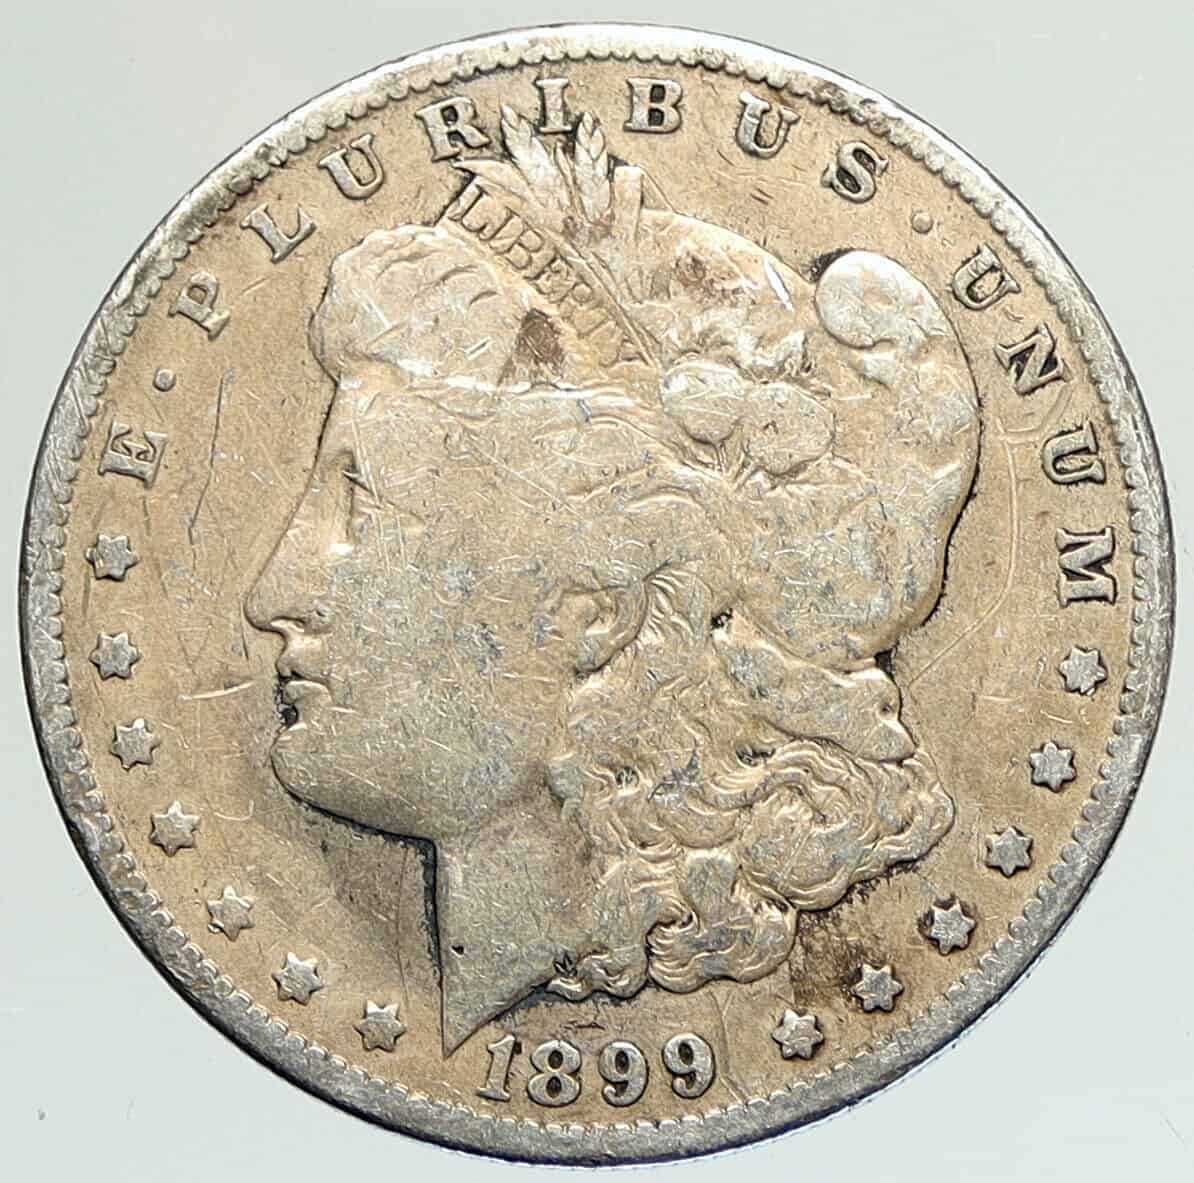 1899 Silver Dollar Value Guides (Rare Errors. “O”, “S” & No Mint Mark)